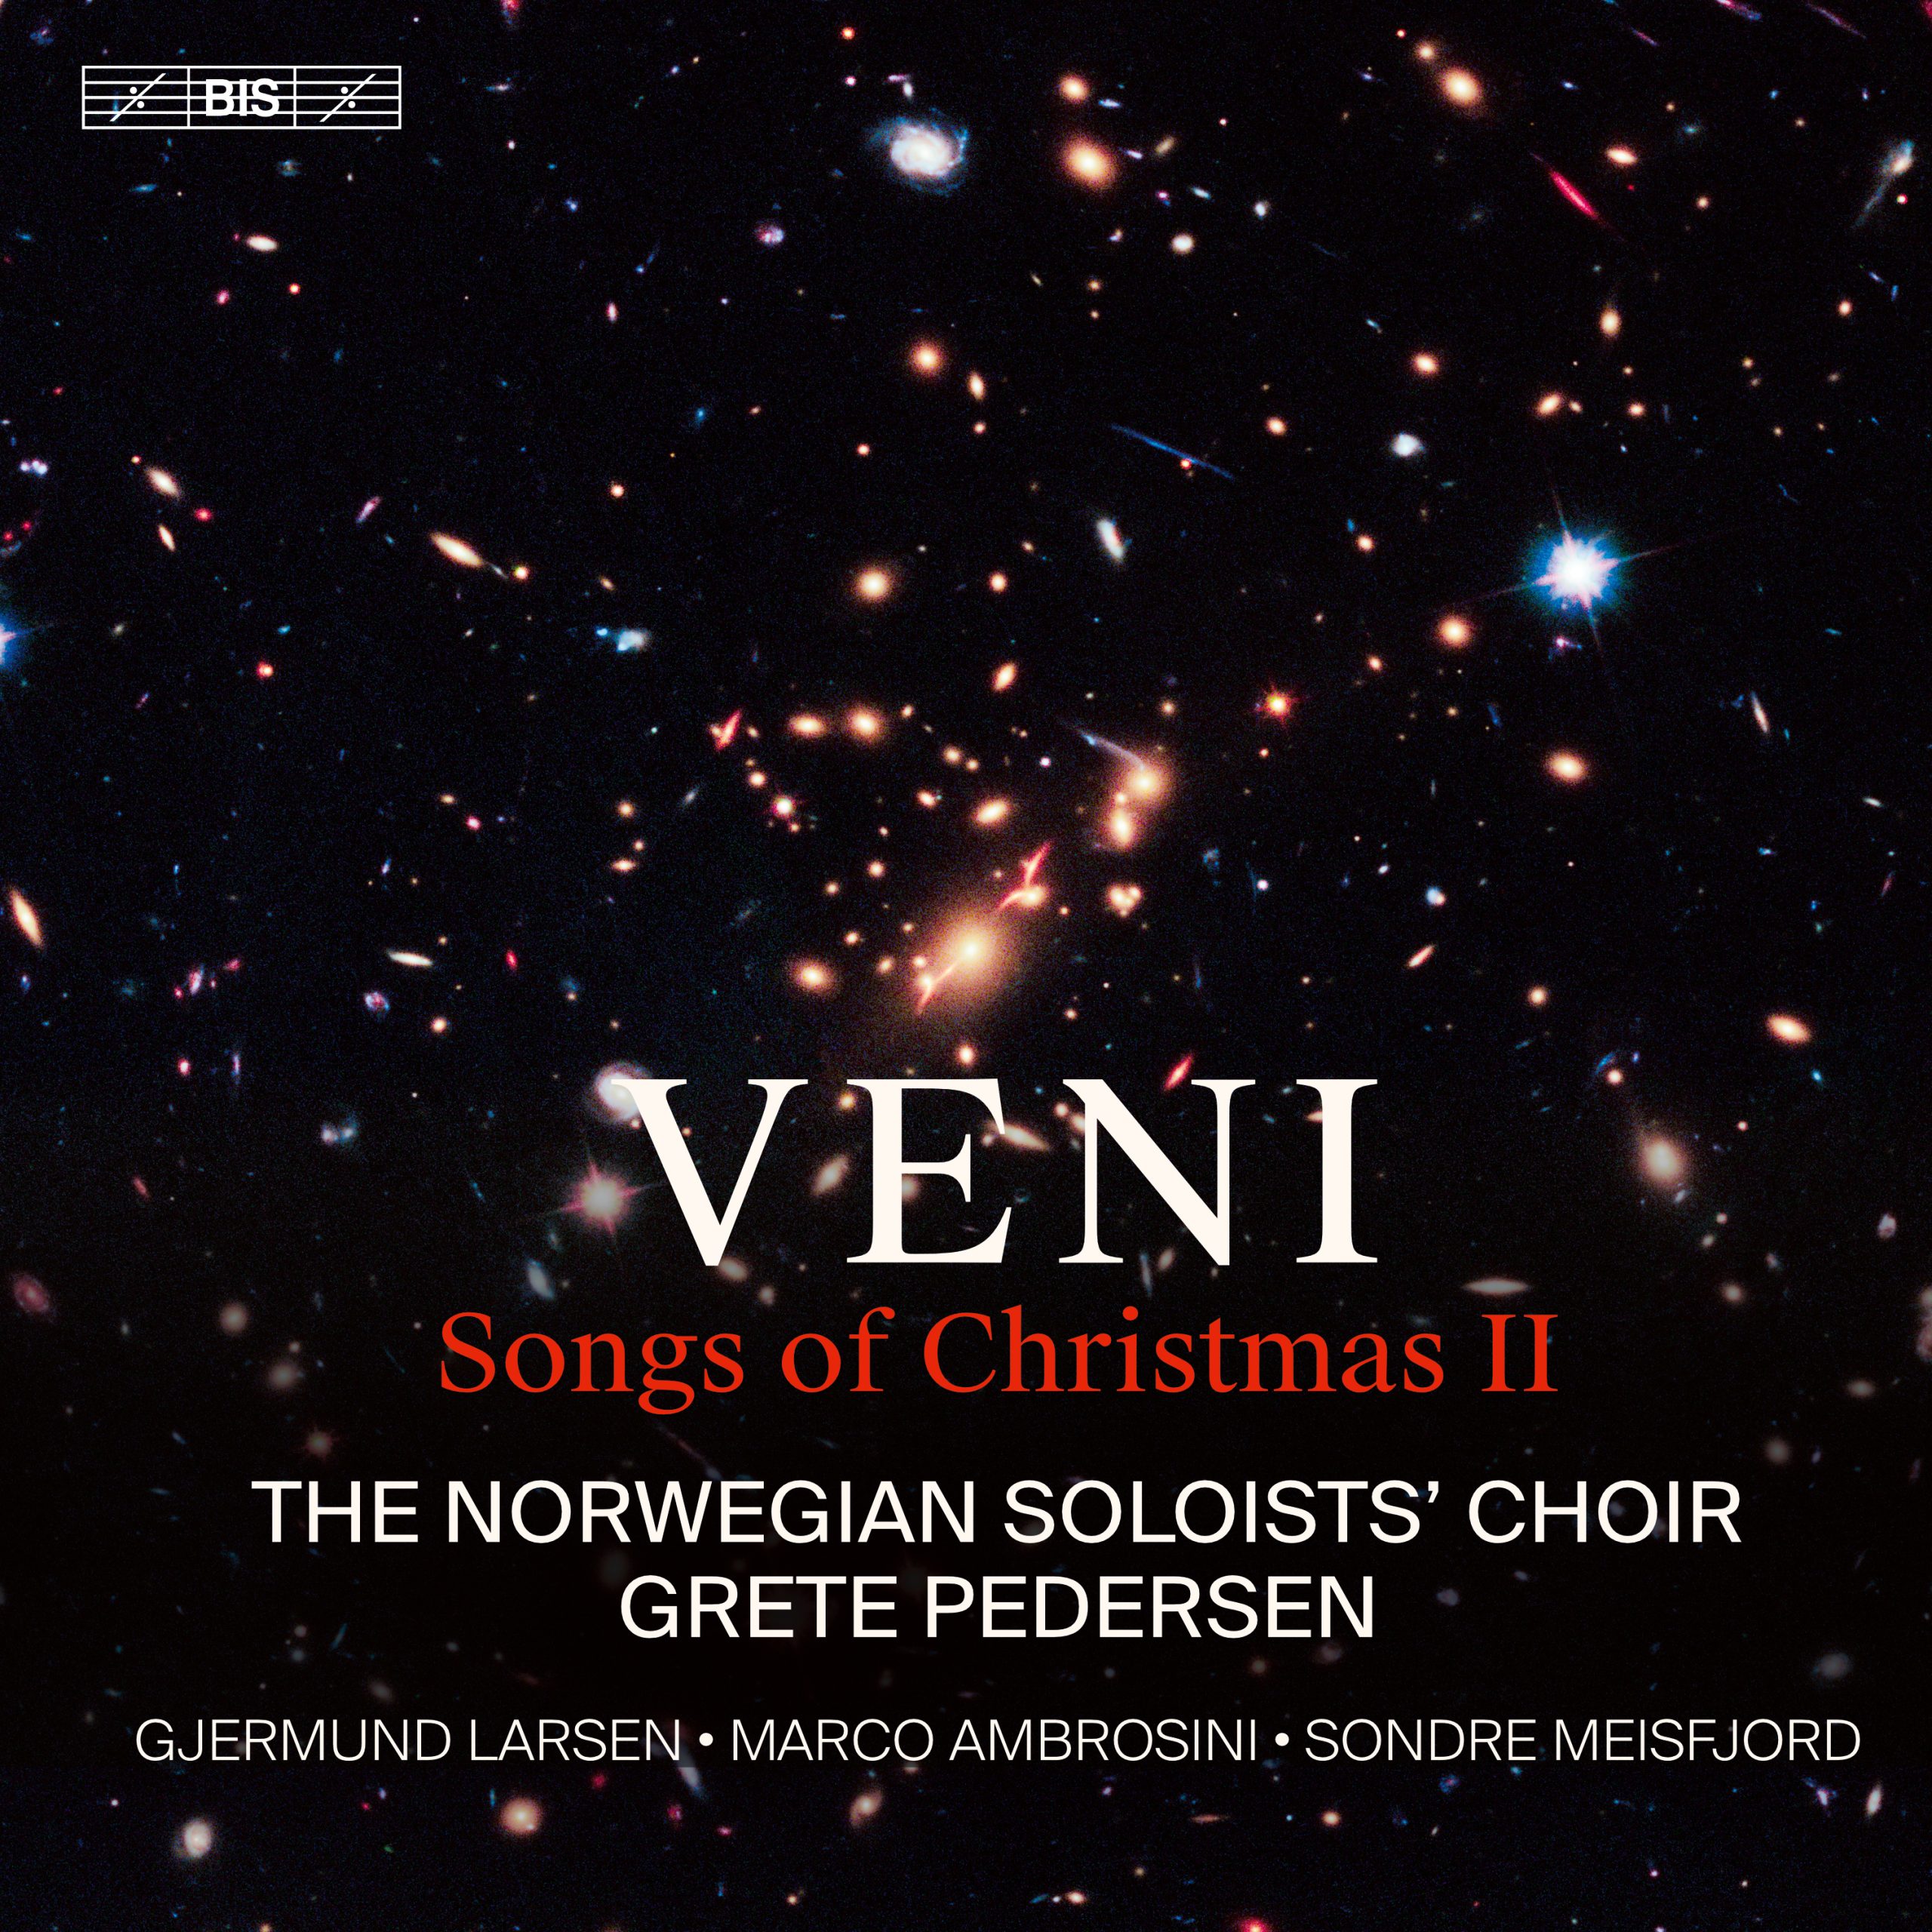 Norwegian-Soloists-Choir-Grete-Pedersen-Veni-Songs-of-Christmas-2